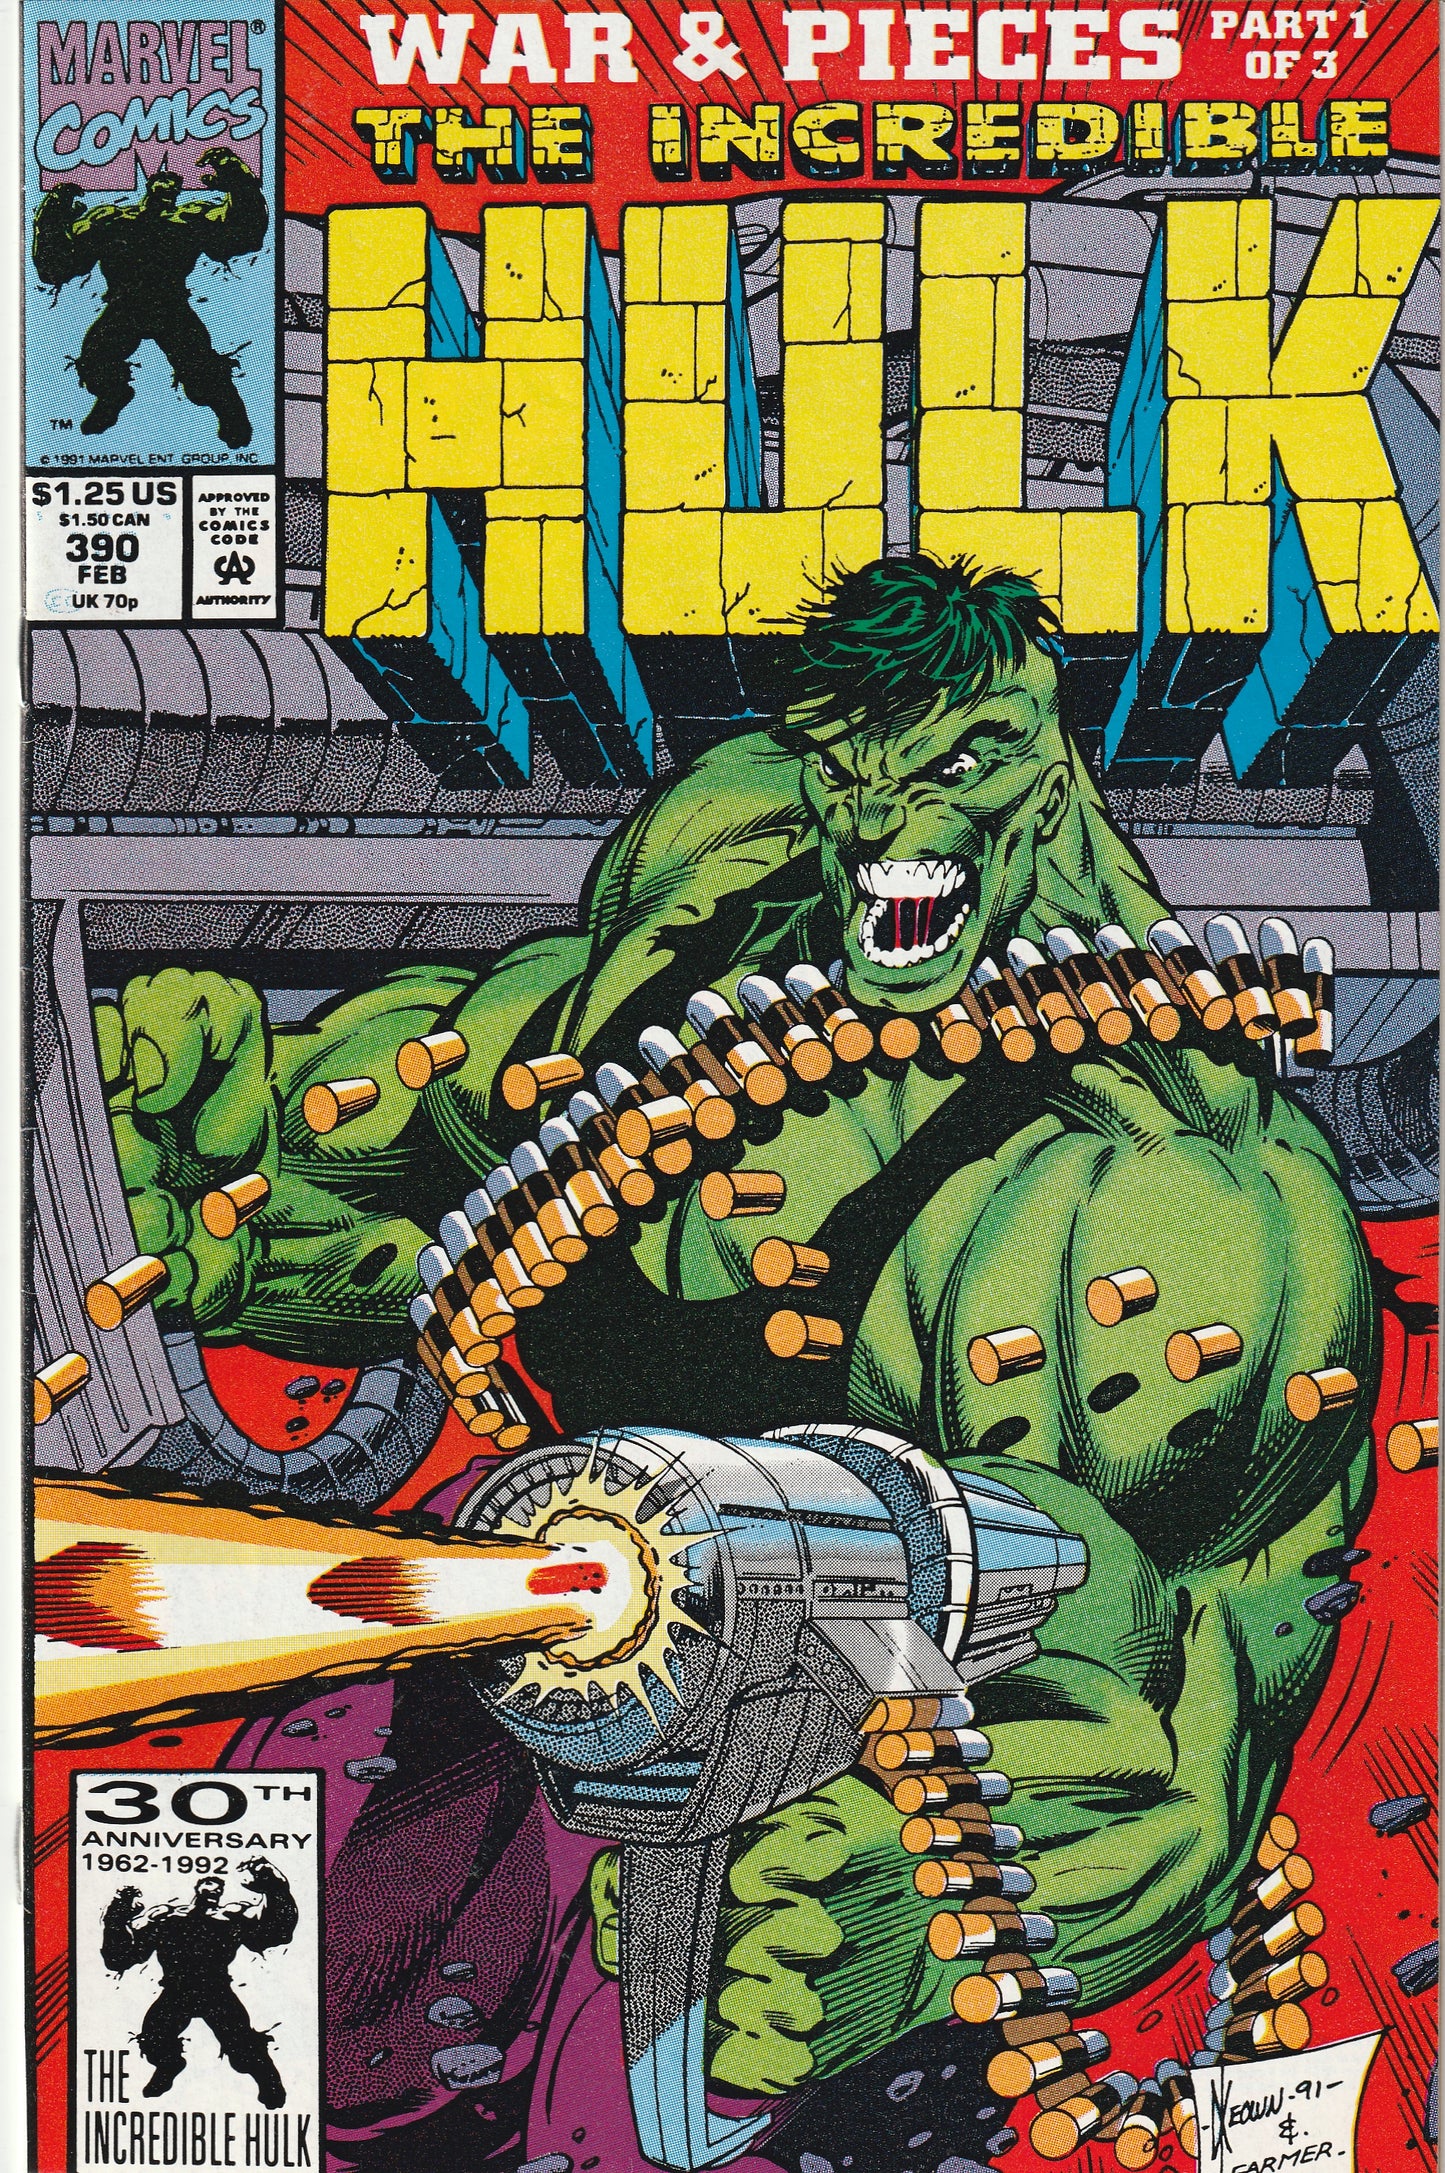 Incredible Hulk #390 (1992) - X-Factor cameo